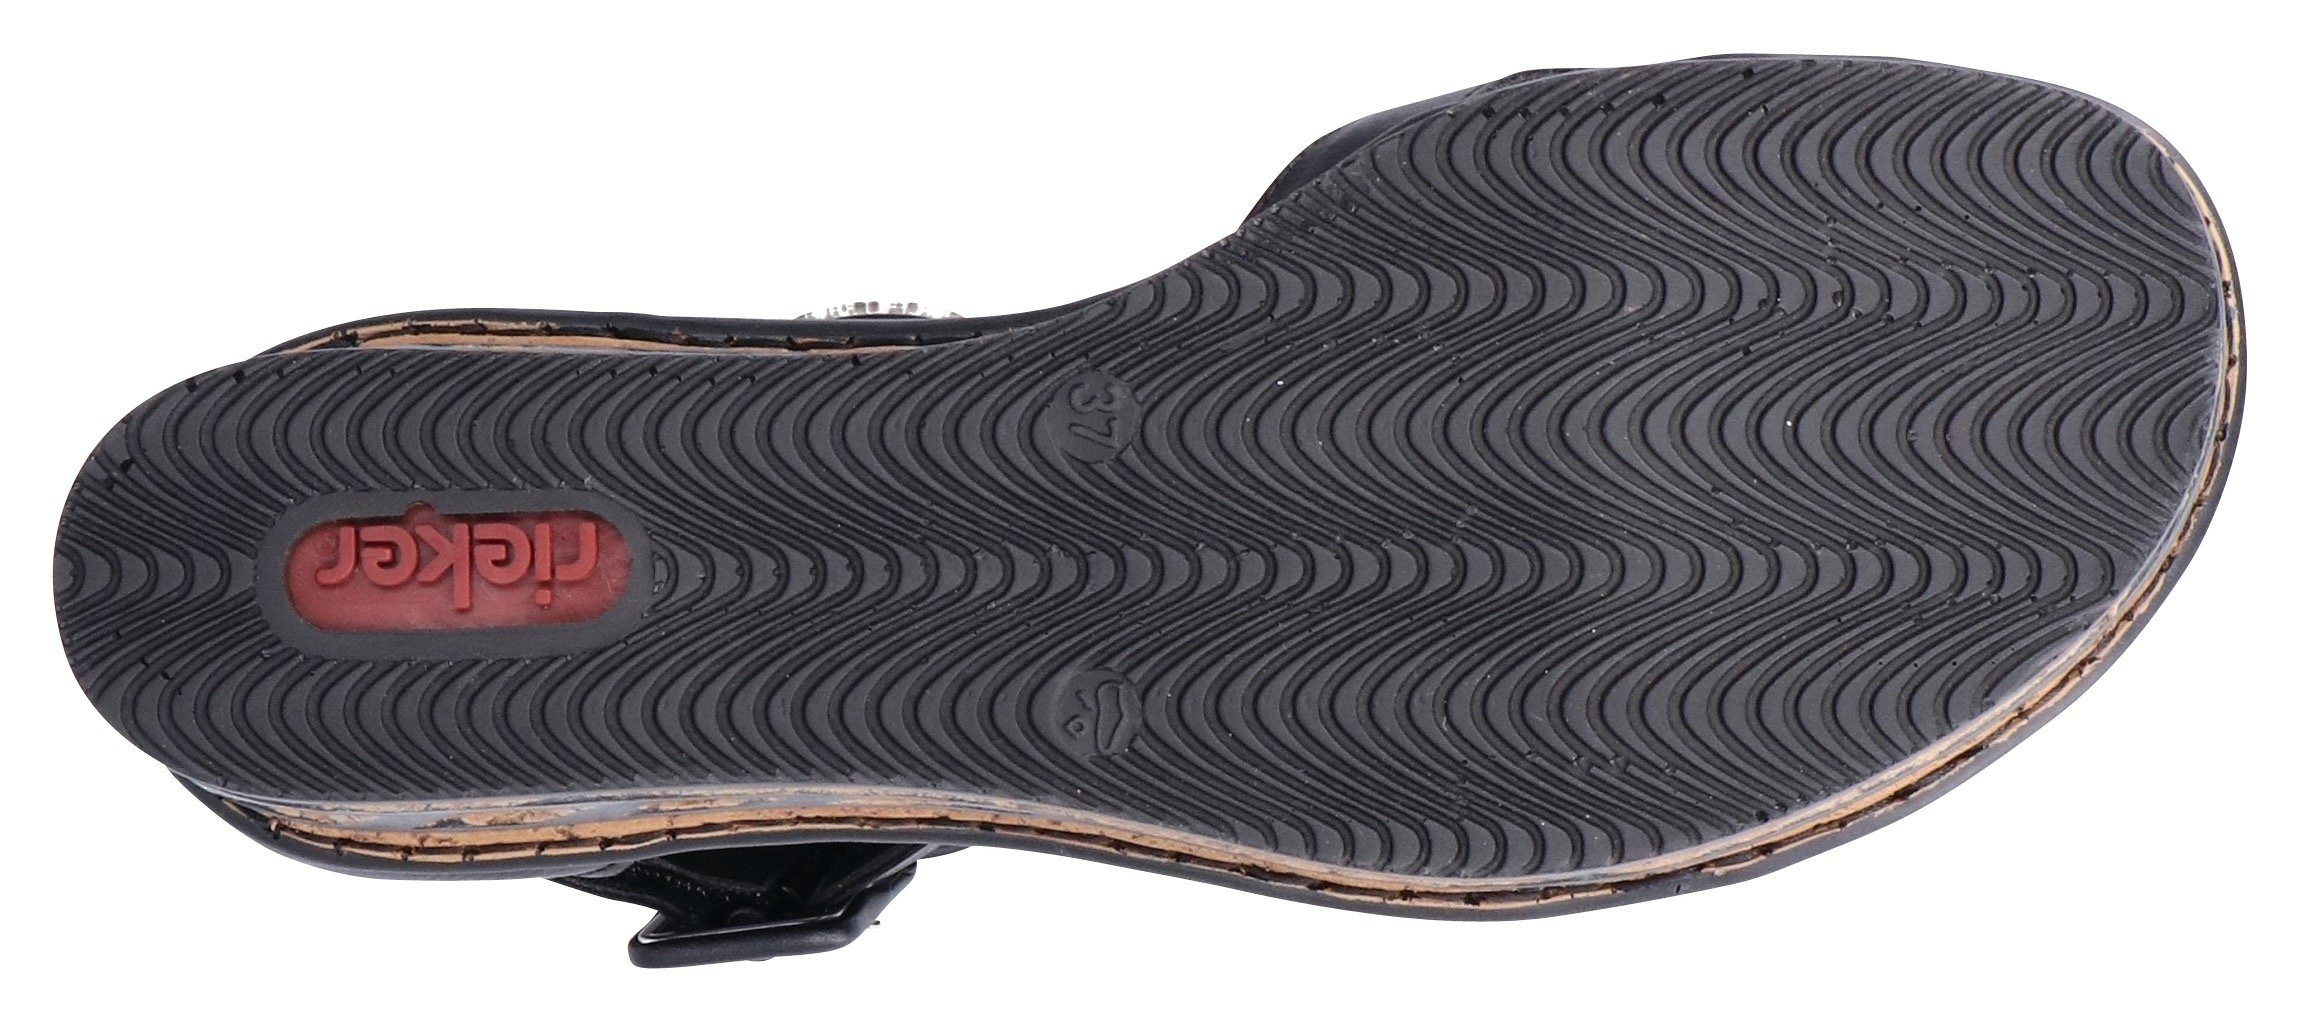 Rieker Sandalette mit Laufsohle Kork-Optik in trendiger